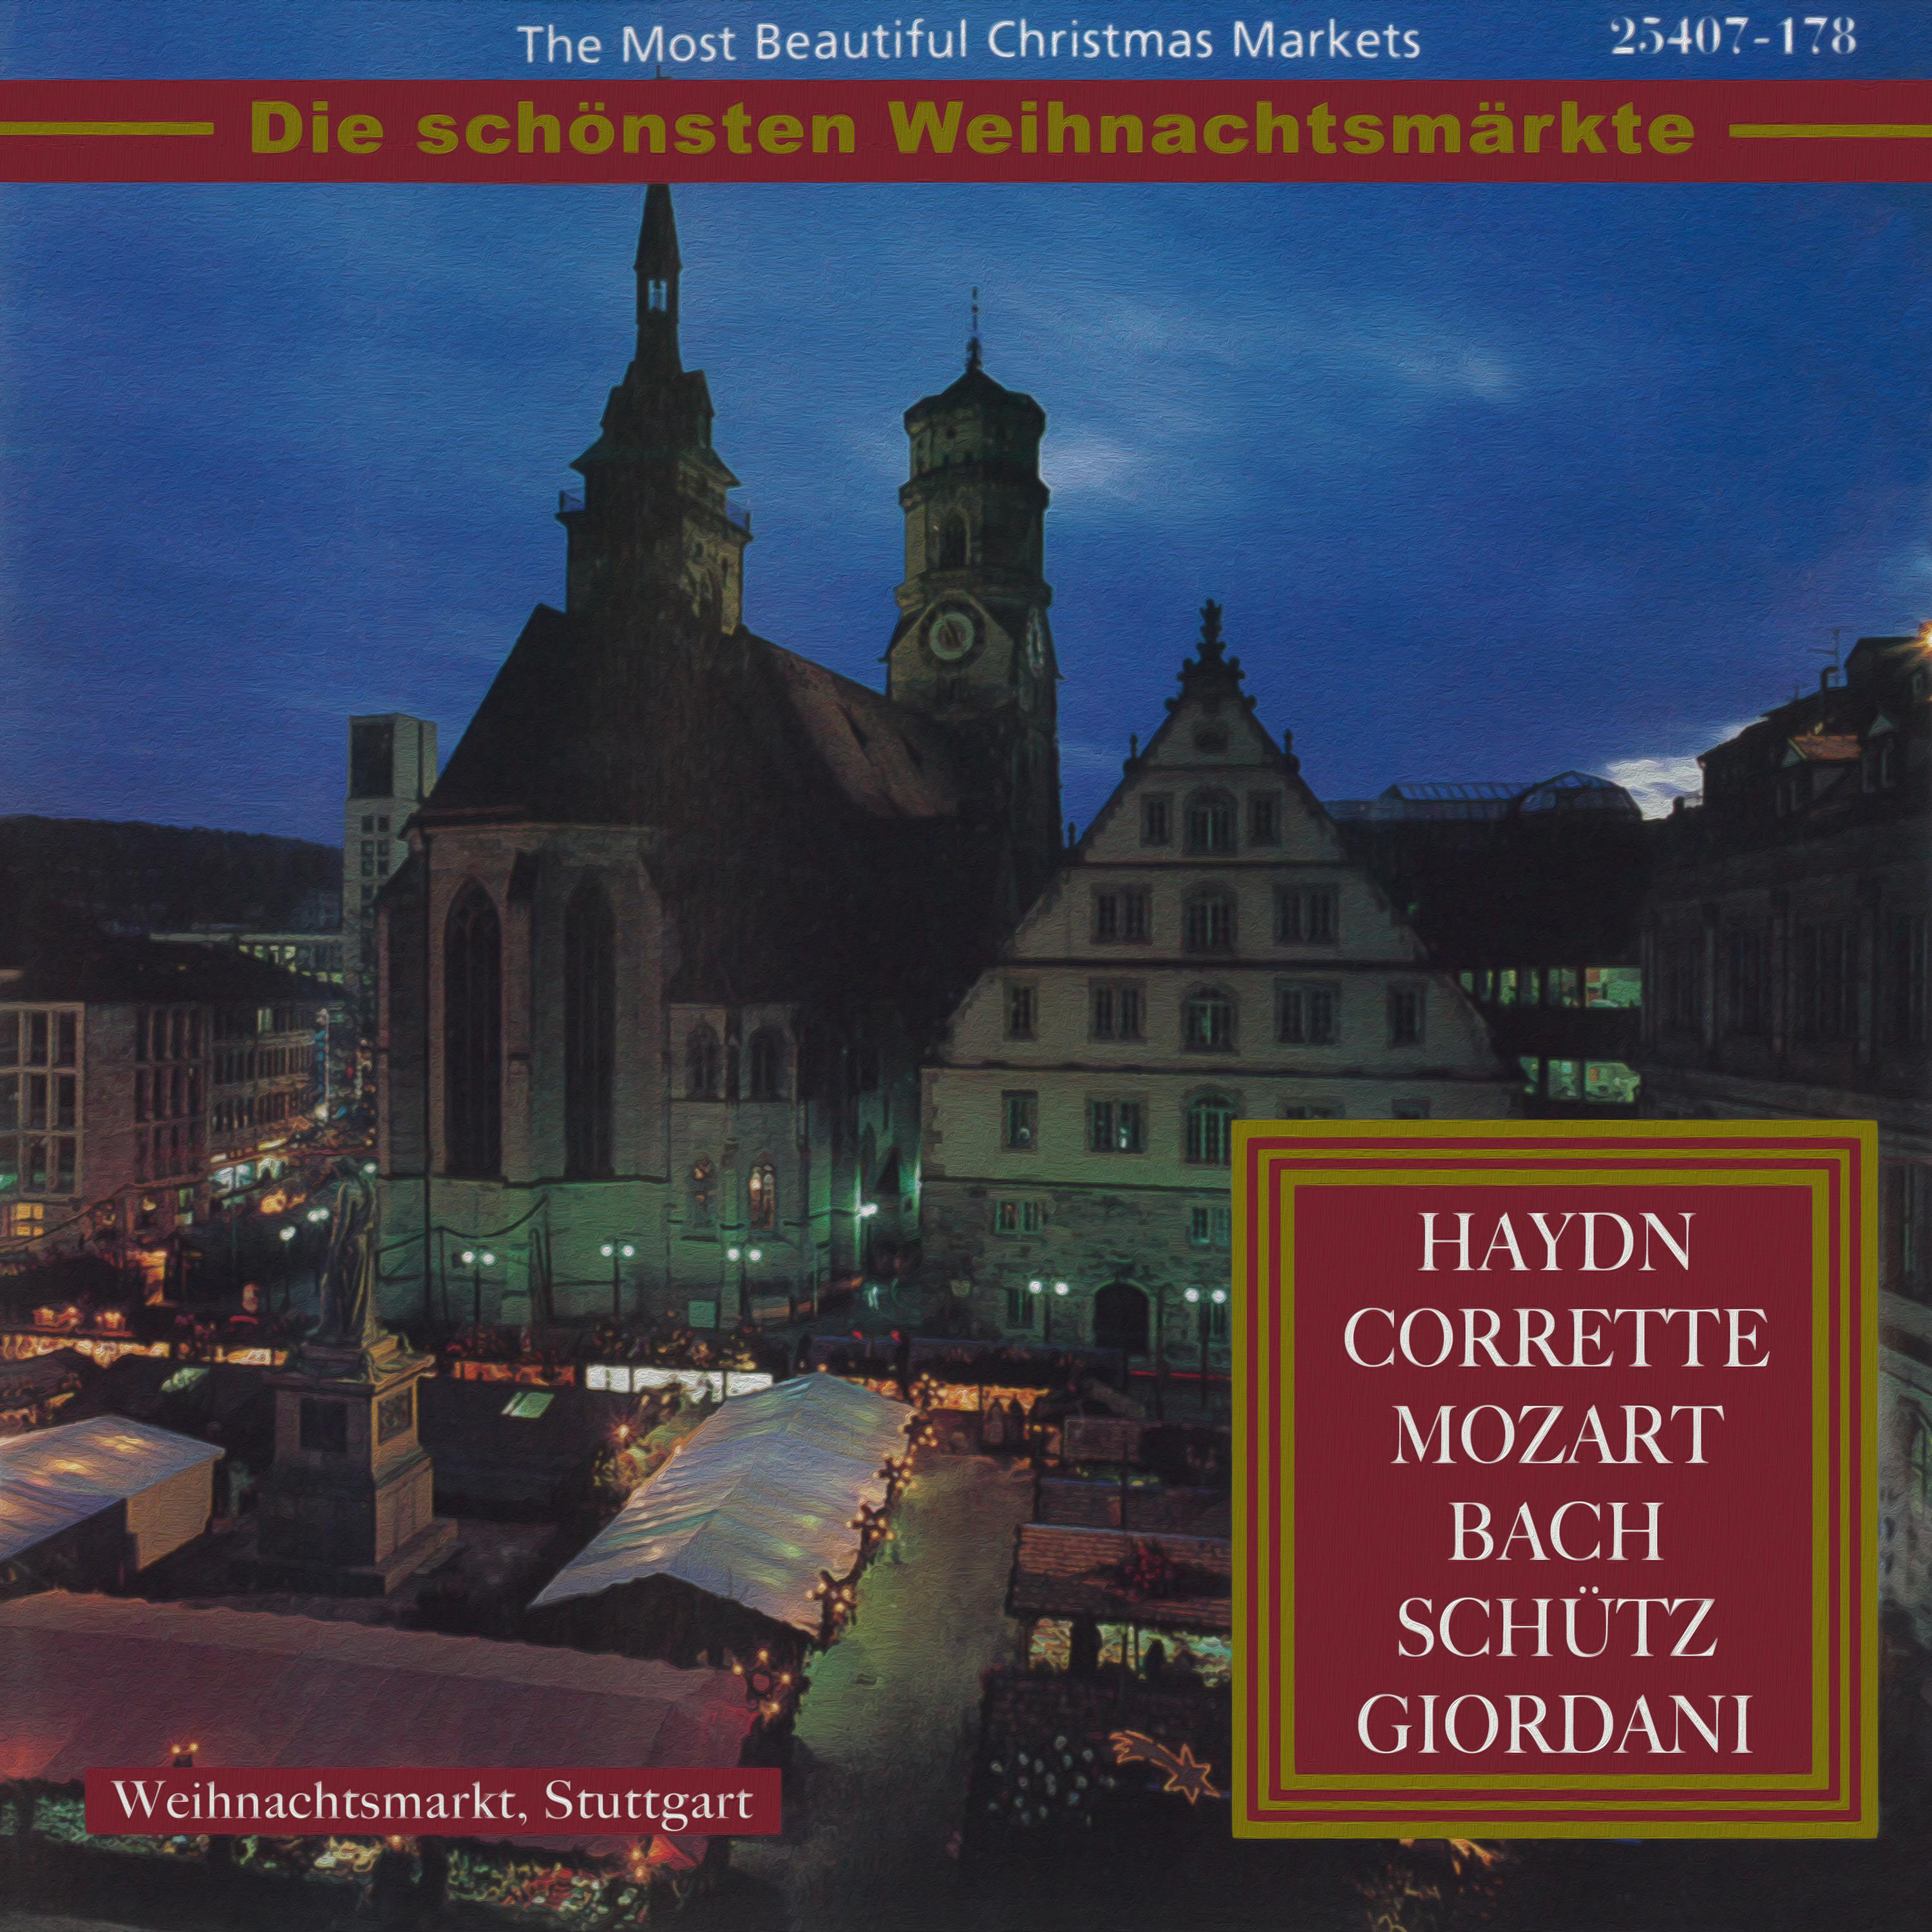 Württemberg Chamber Orchestra Heilbronn - Brandenburg Concerto No. 1 in F Major, BWV 1046: II. Adagio